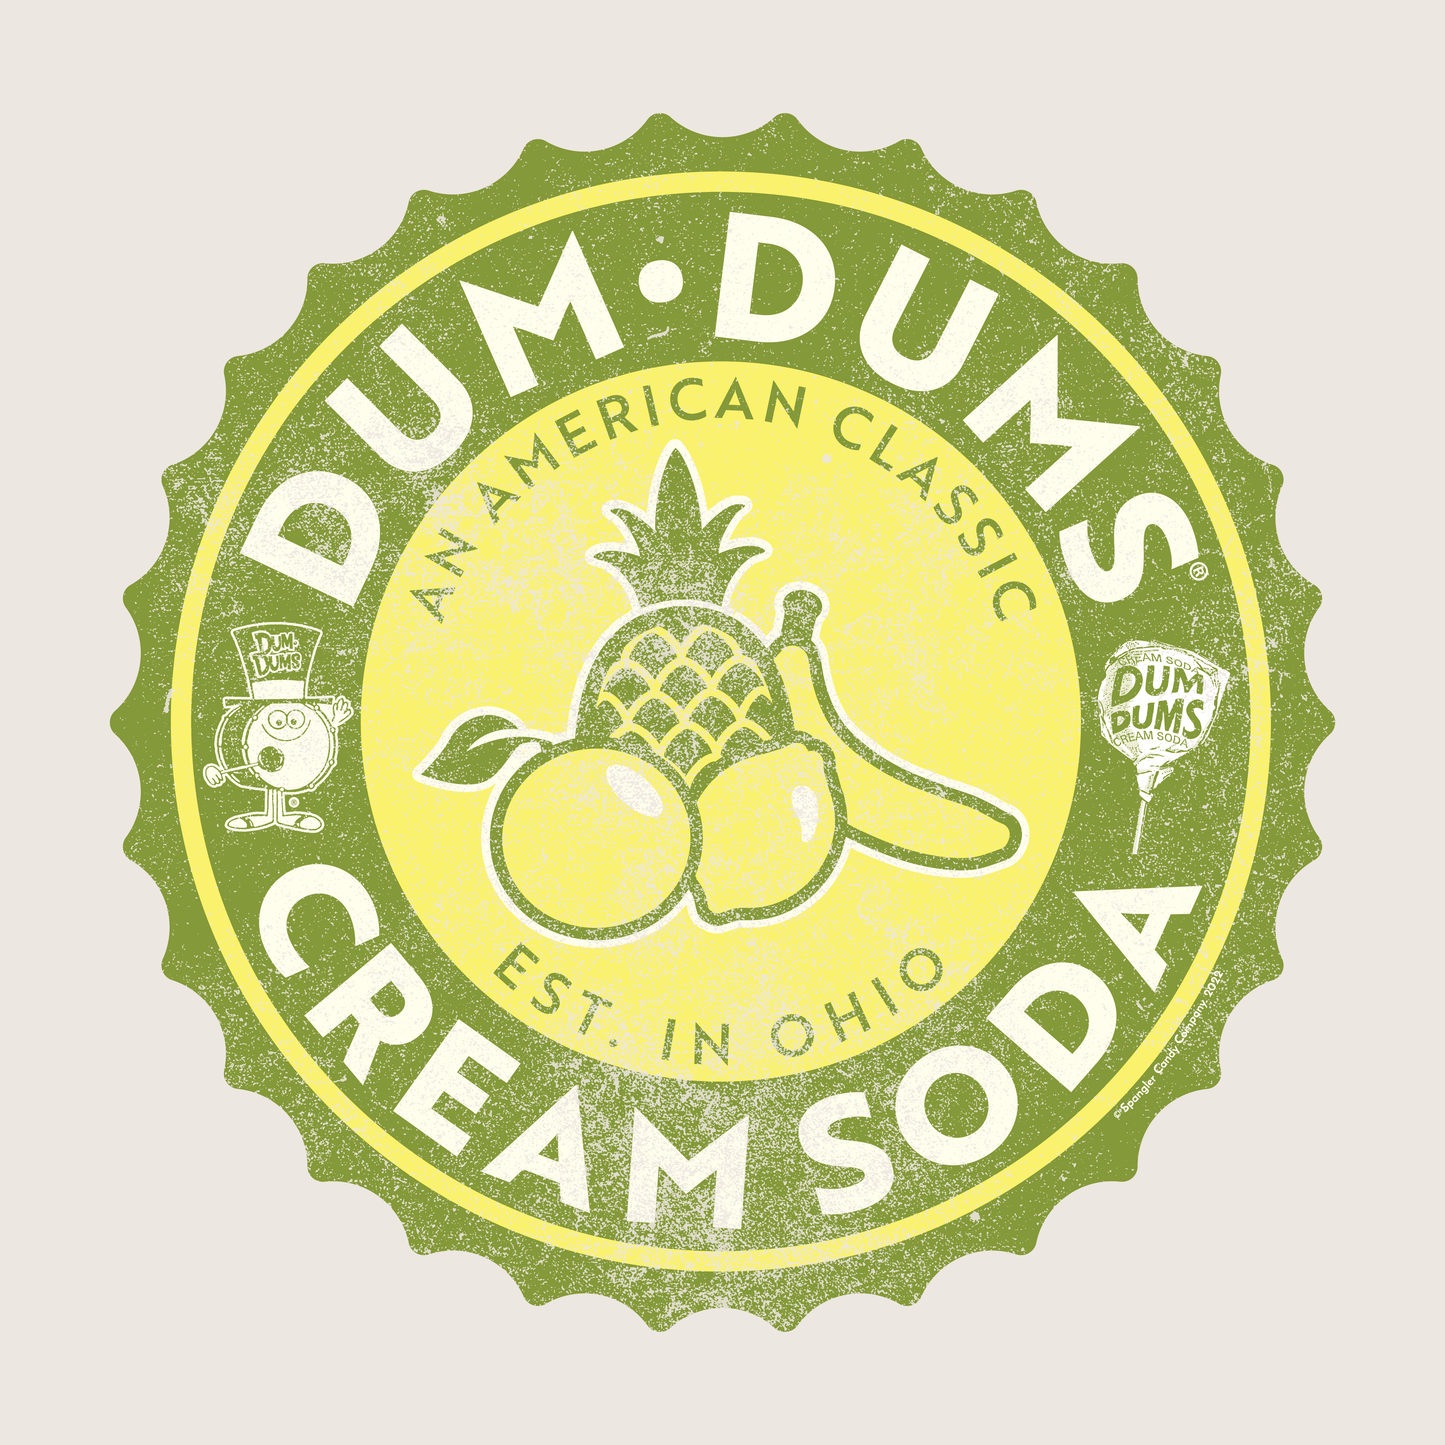 Vintage Dum Dums Cream Soda Bottle Top Tee | Founded in Ohio Unisex Shirt